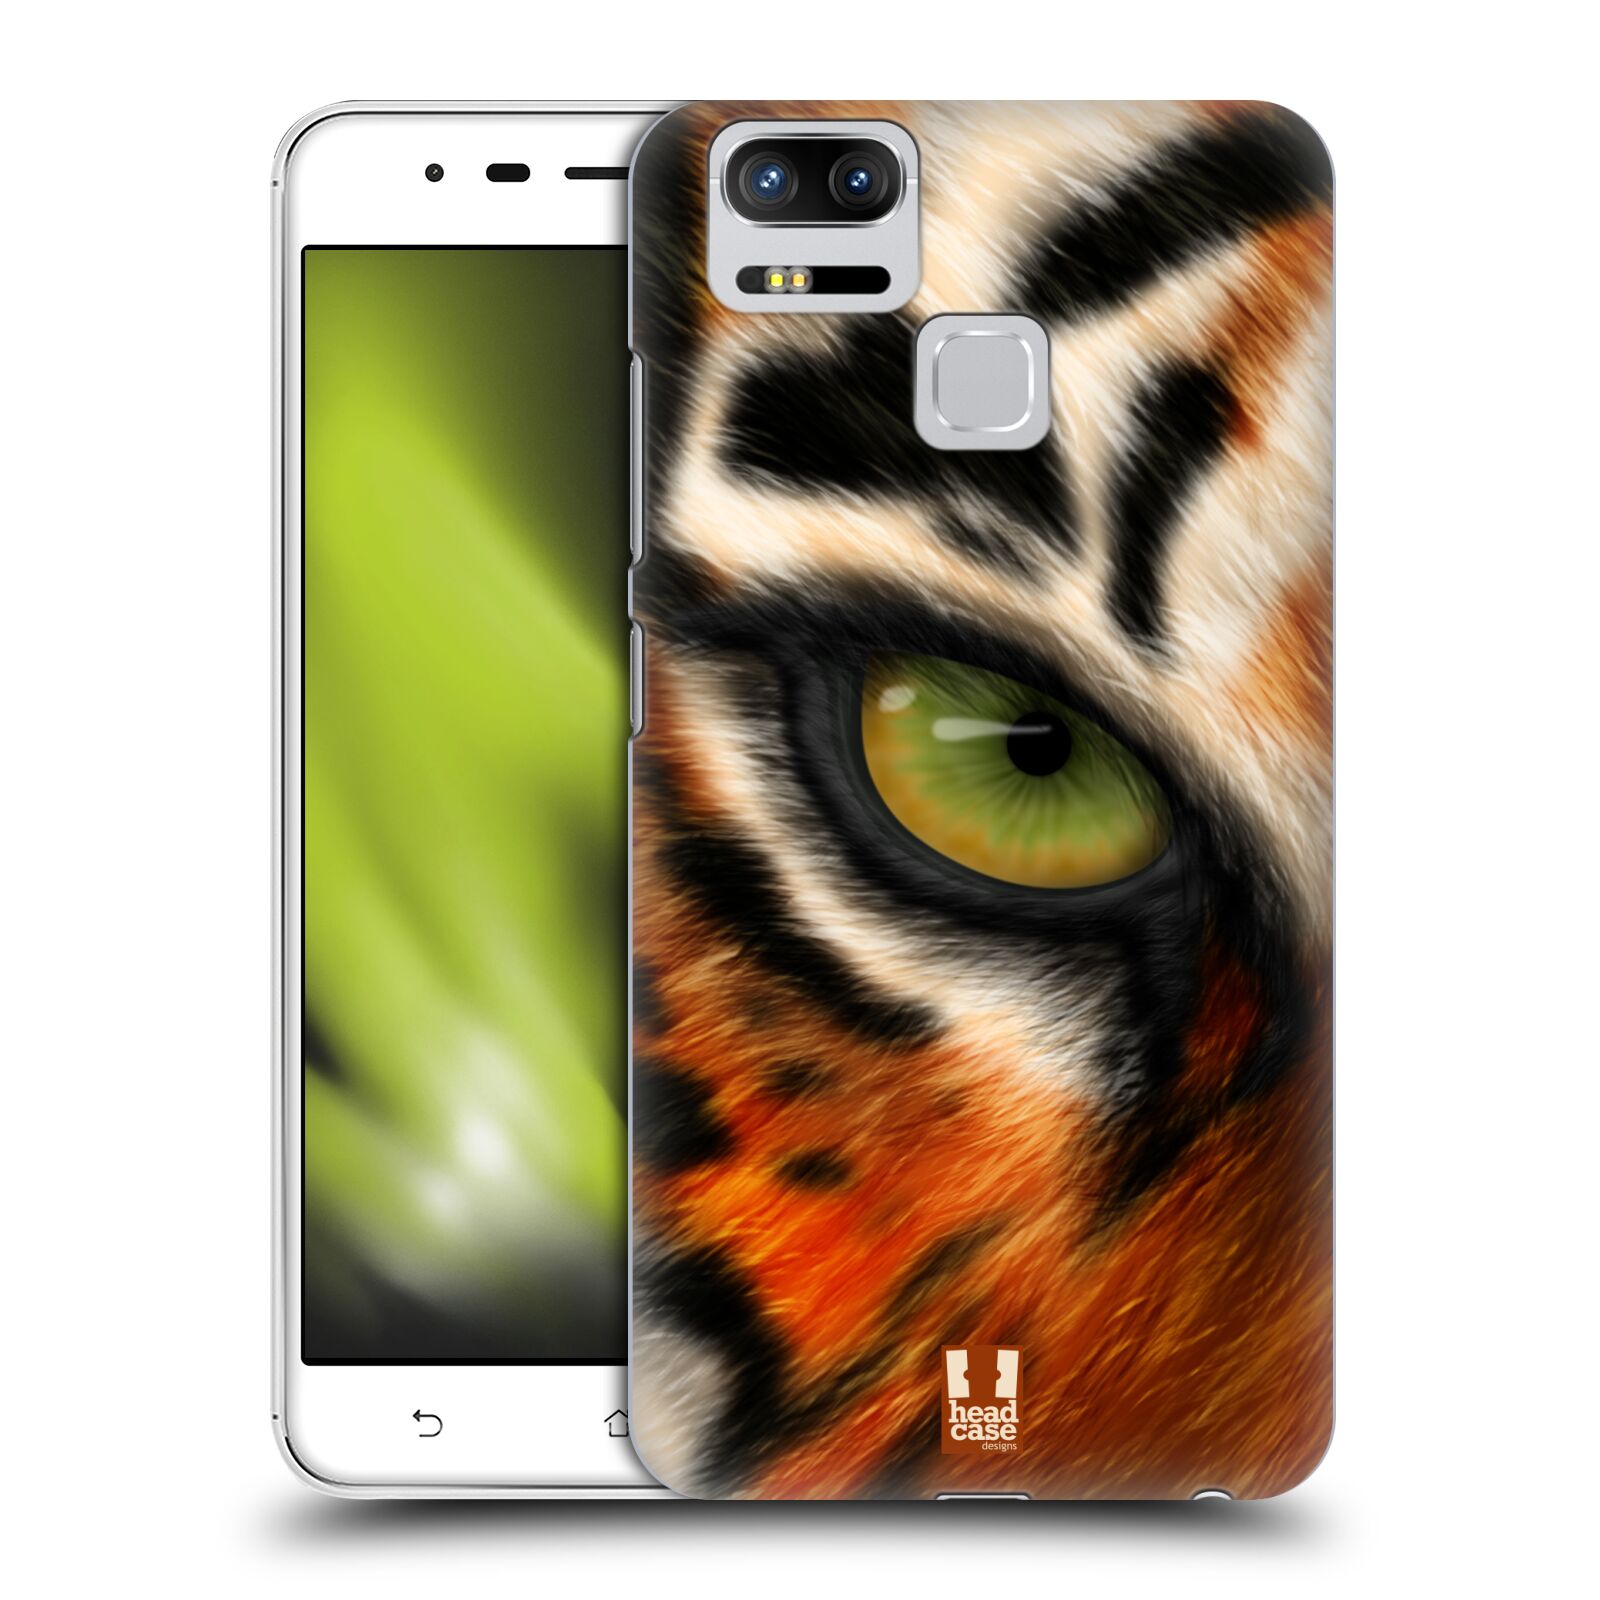 HEAD CASE plastový obal na mobil Asus Zenfone 3 Zoom ZE553KL vzor pohled zvířete oko tygr